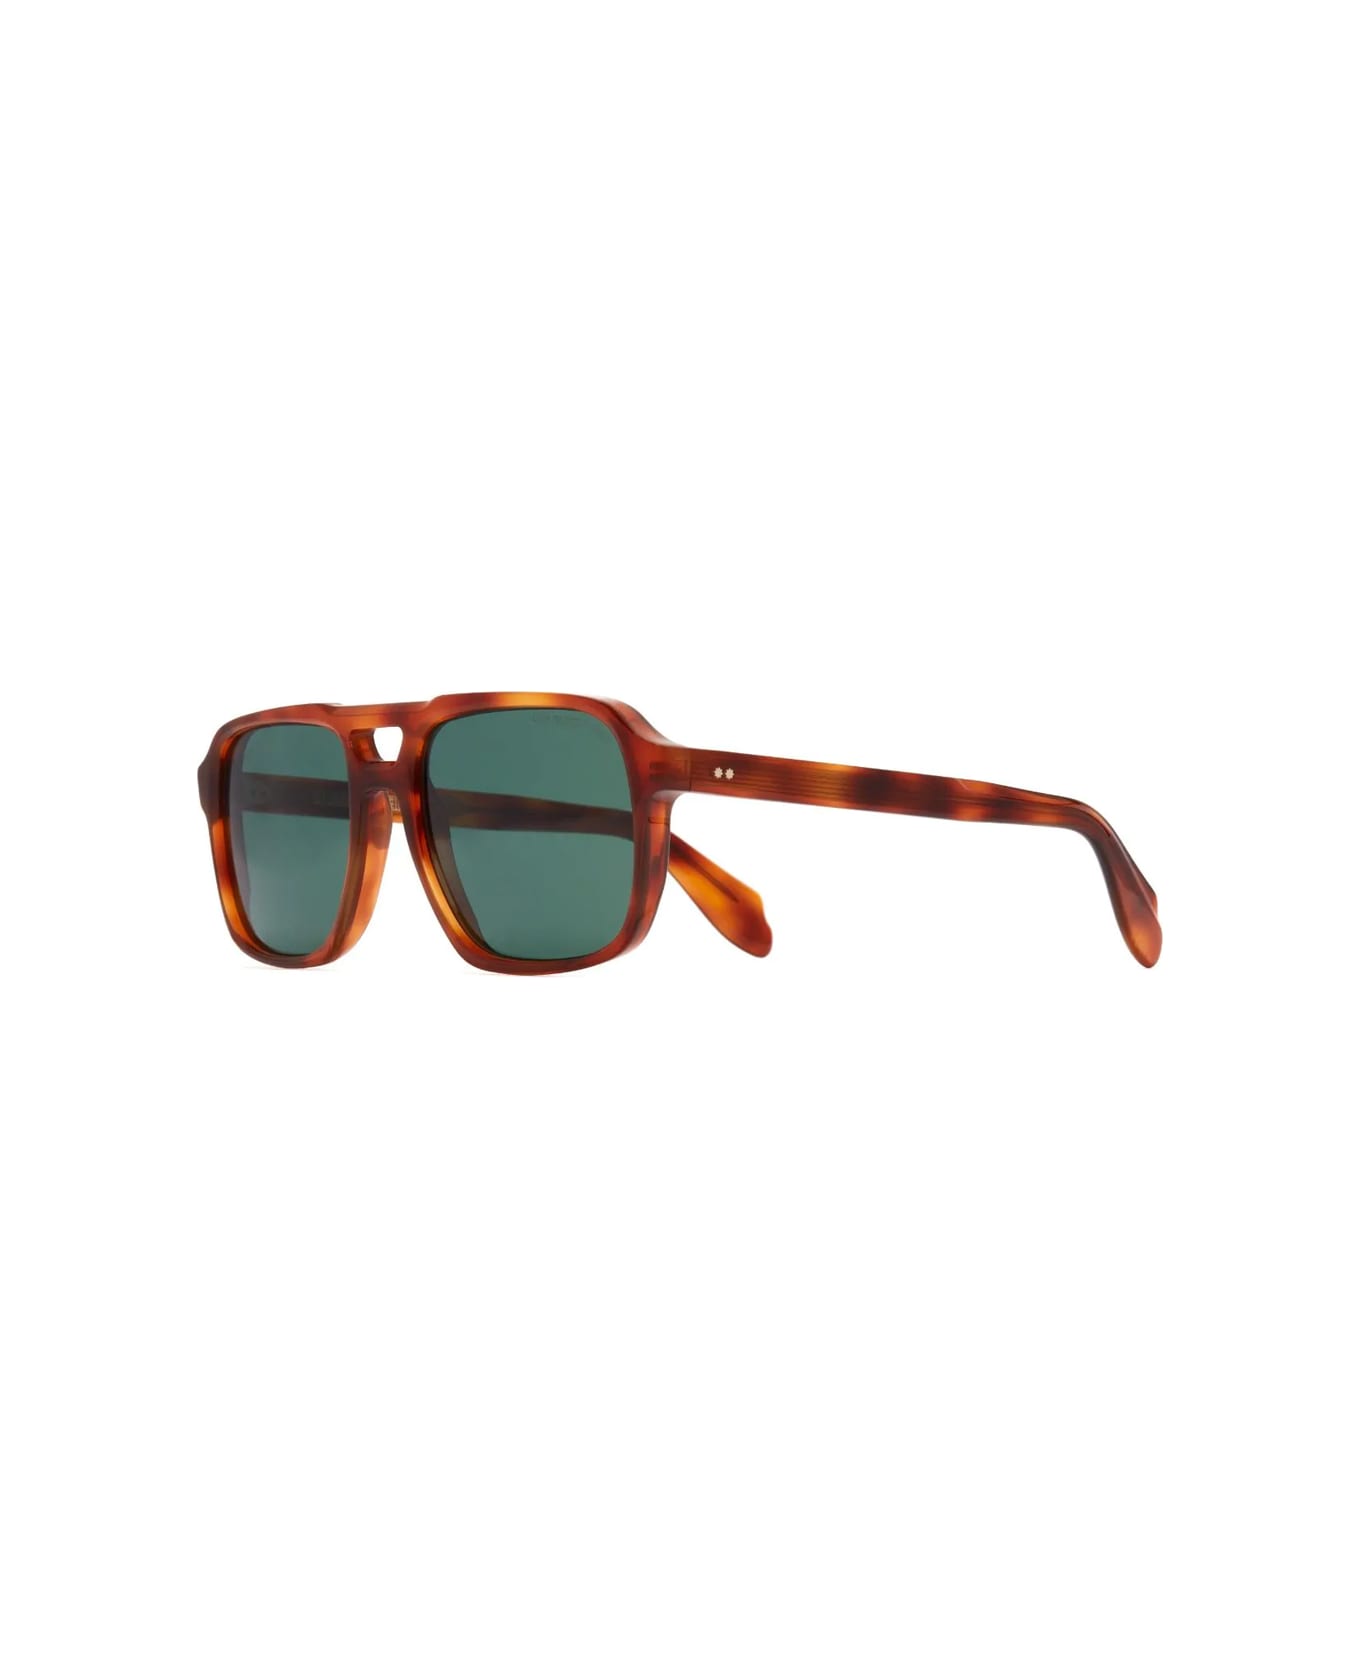 Cutler and Gross 1394 05 Sunglasses - Marrone サングラス